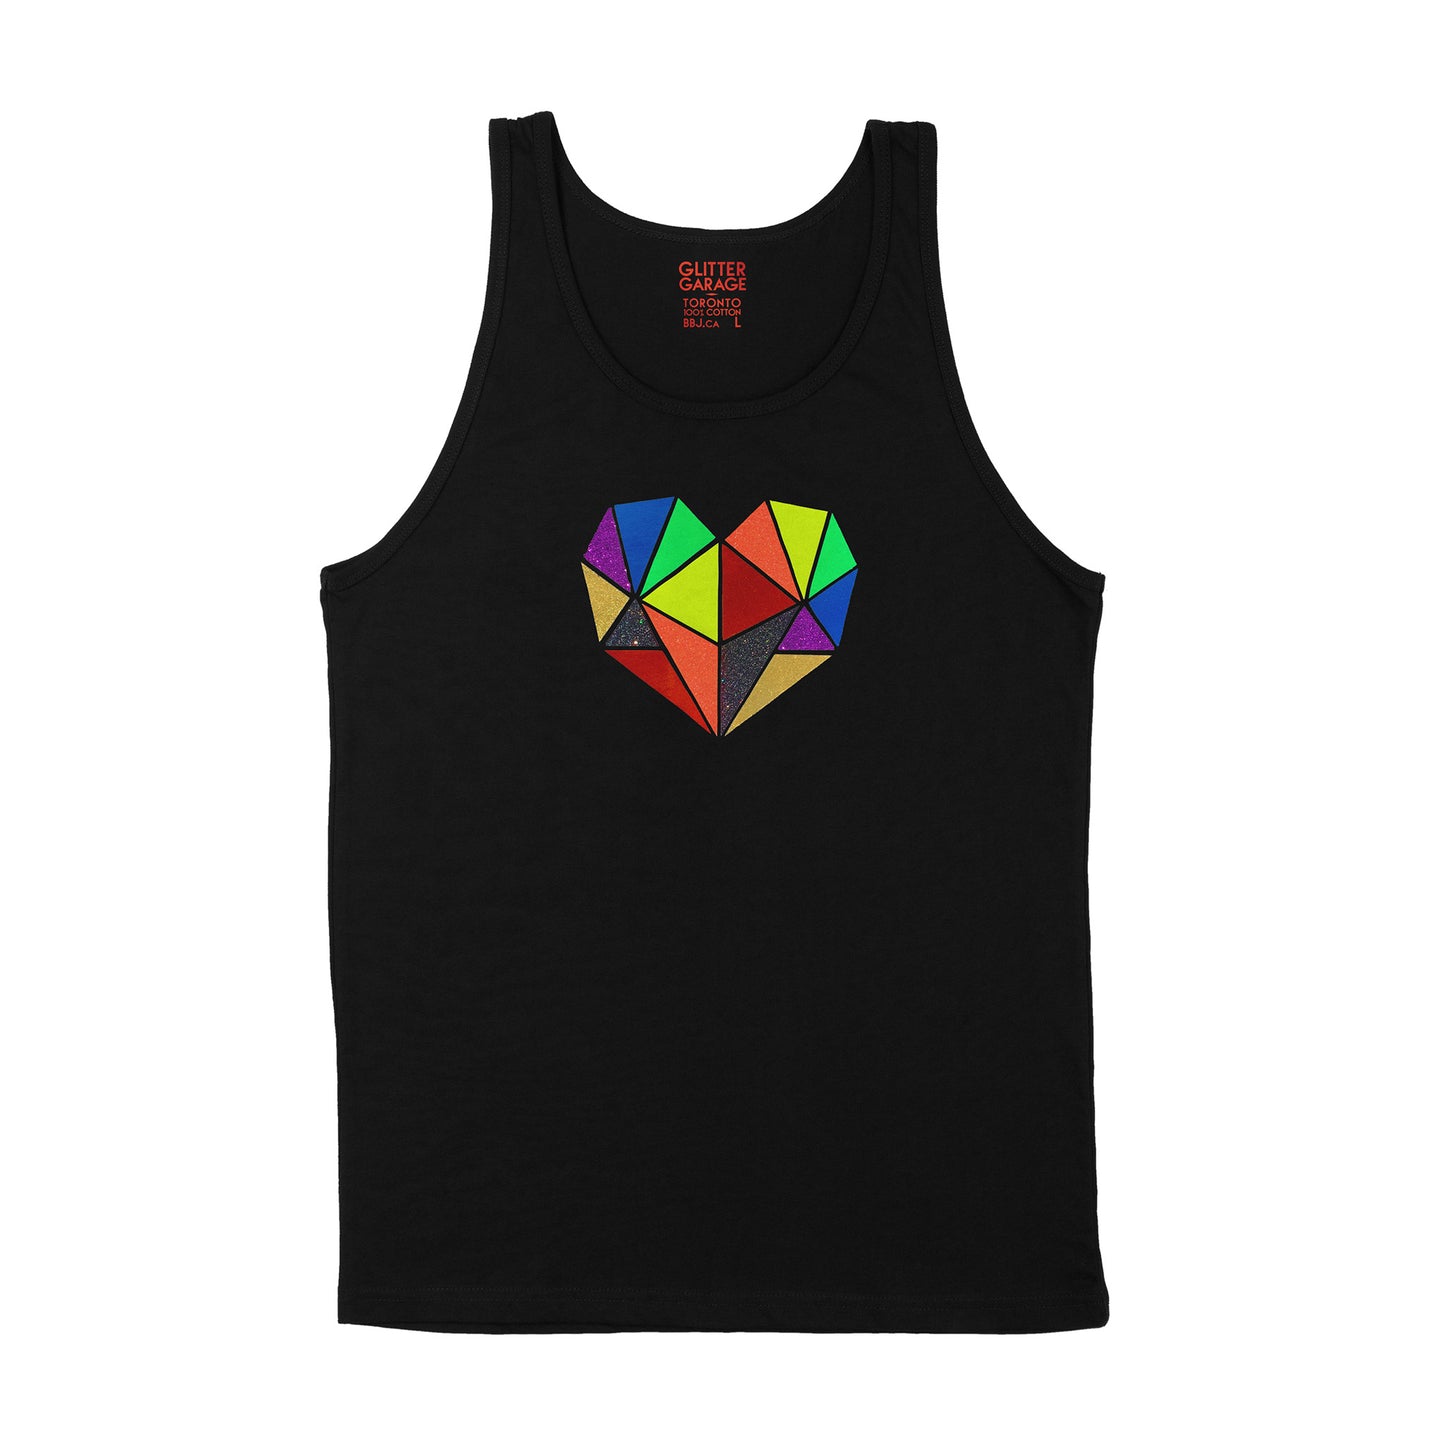 Vibrant rainbow faceted heart design with hand-applied neon, metallic and glitter vinyl on black unisex tank shirt - by BBJ / Glitter Garage